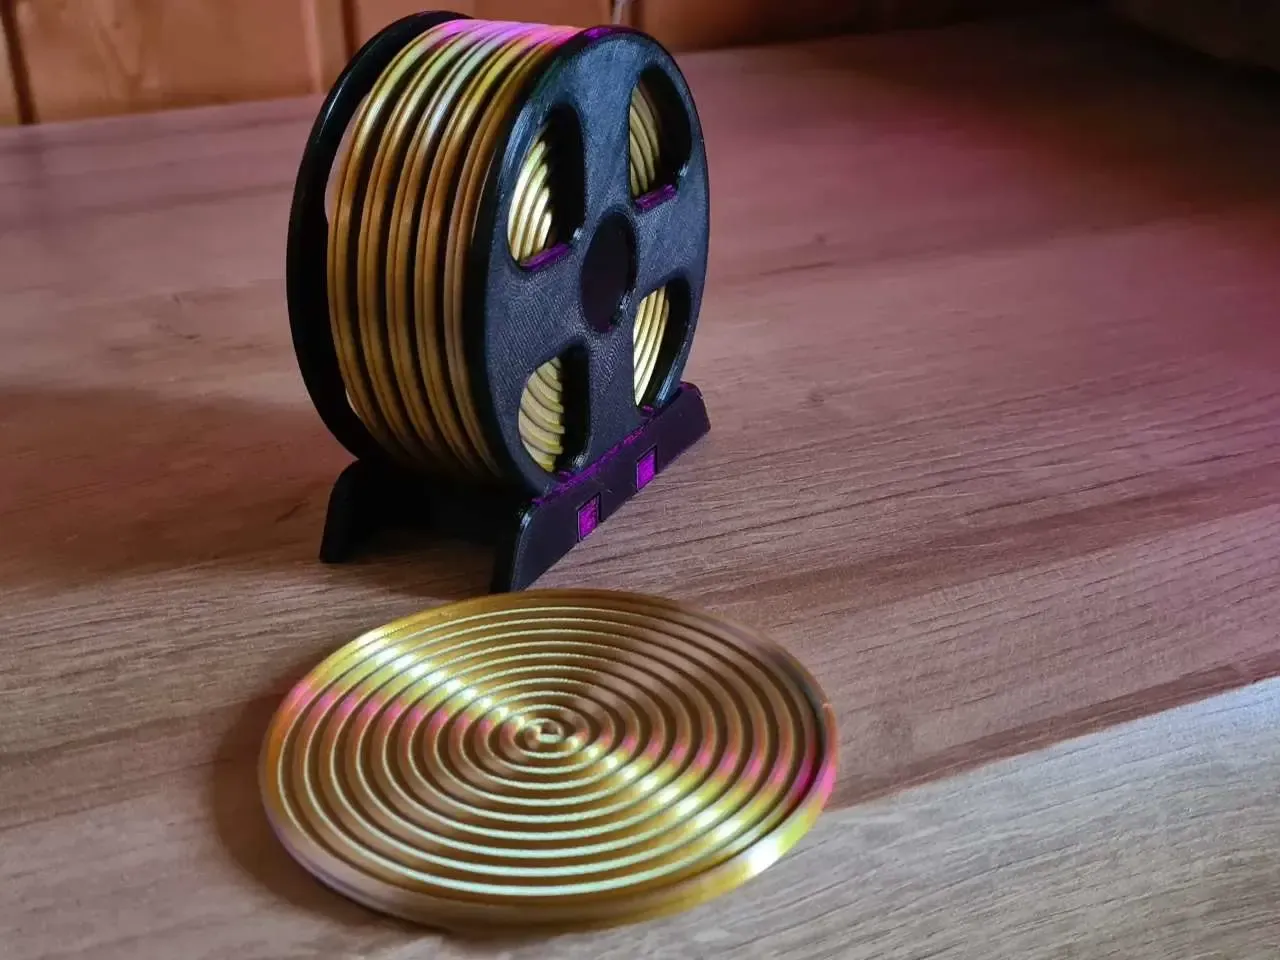 Coaster in a Filament Spoolholder